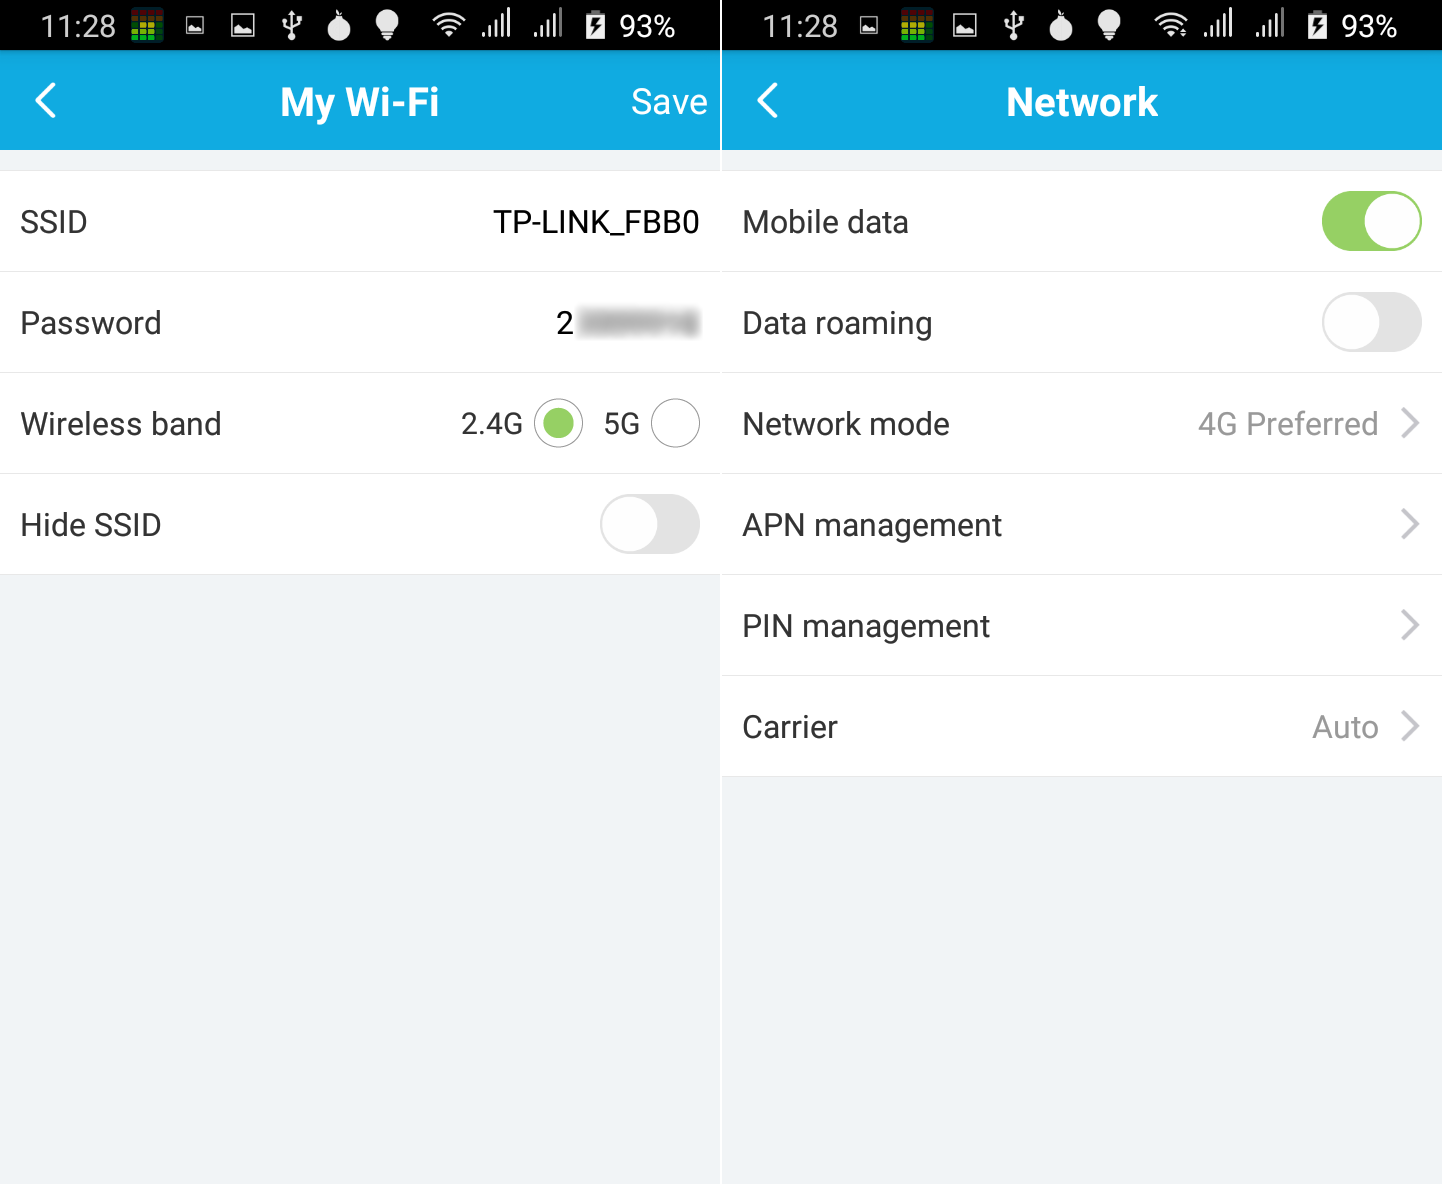 tpmifi-tp-link-android-smartfon-siec-wifi-lte-3g